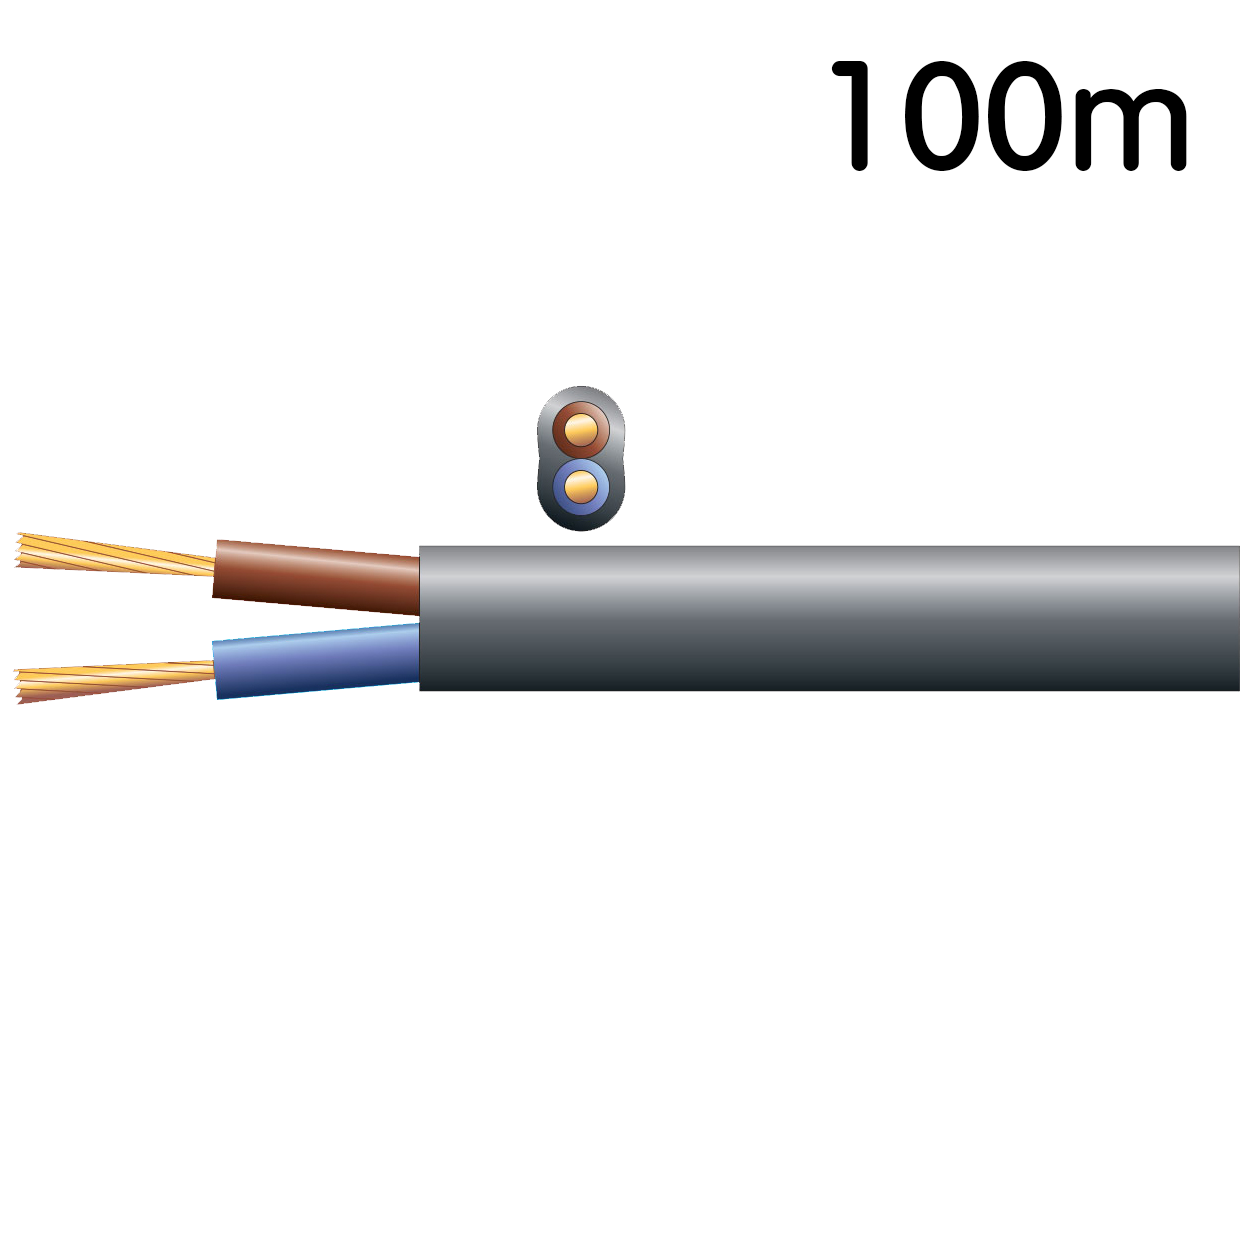 Mercury black oval 100m 3A 100v line speaker cable